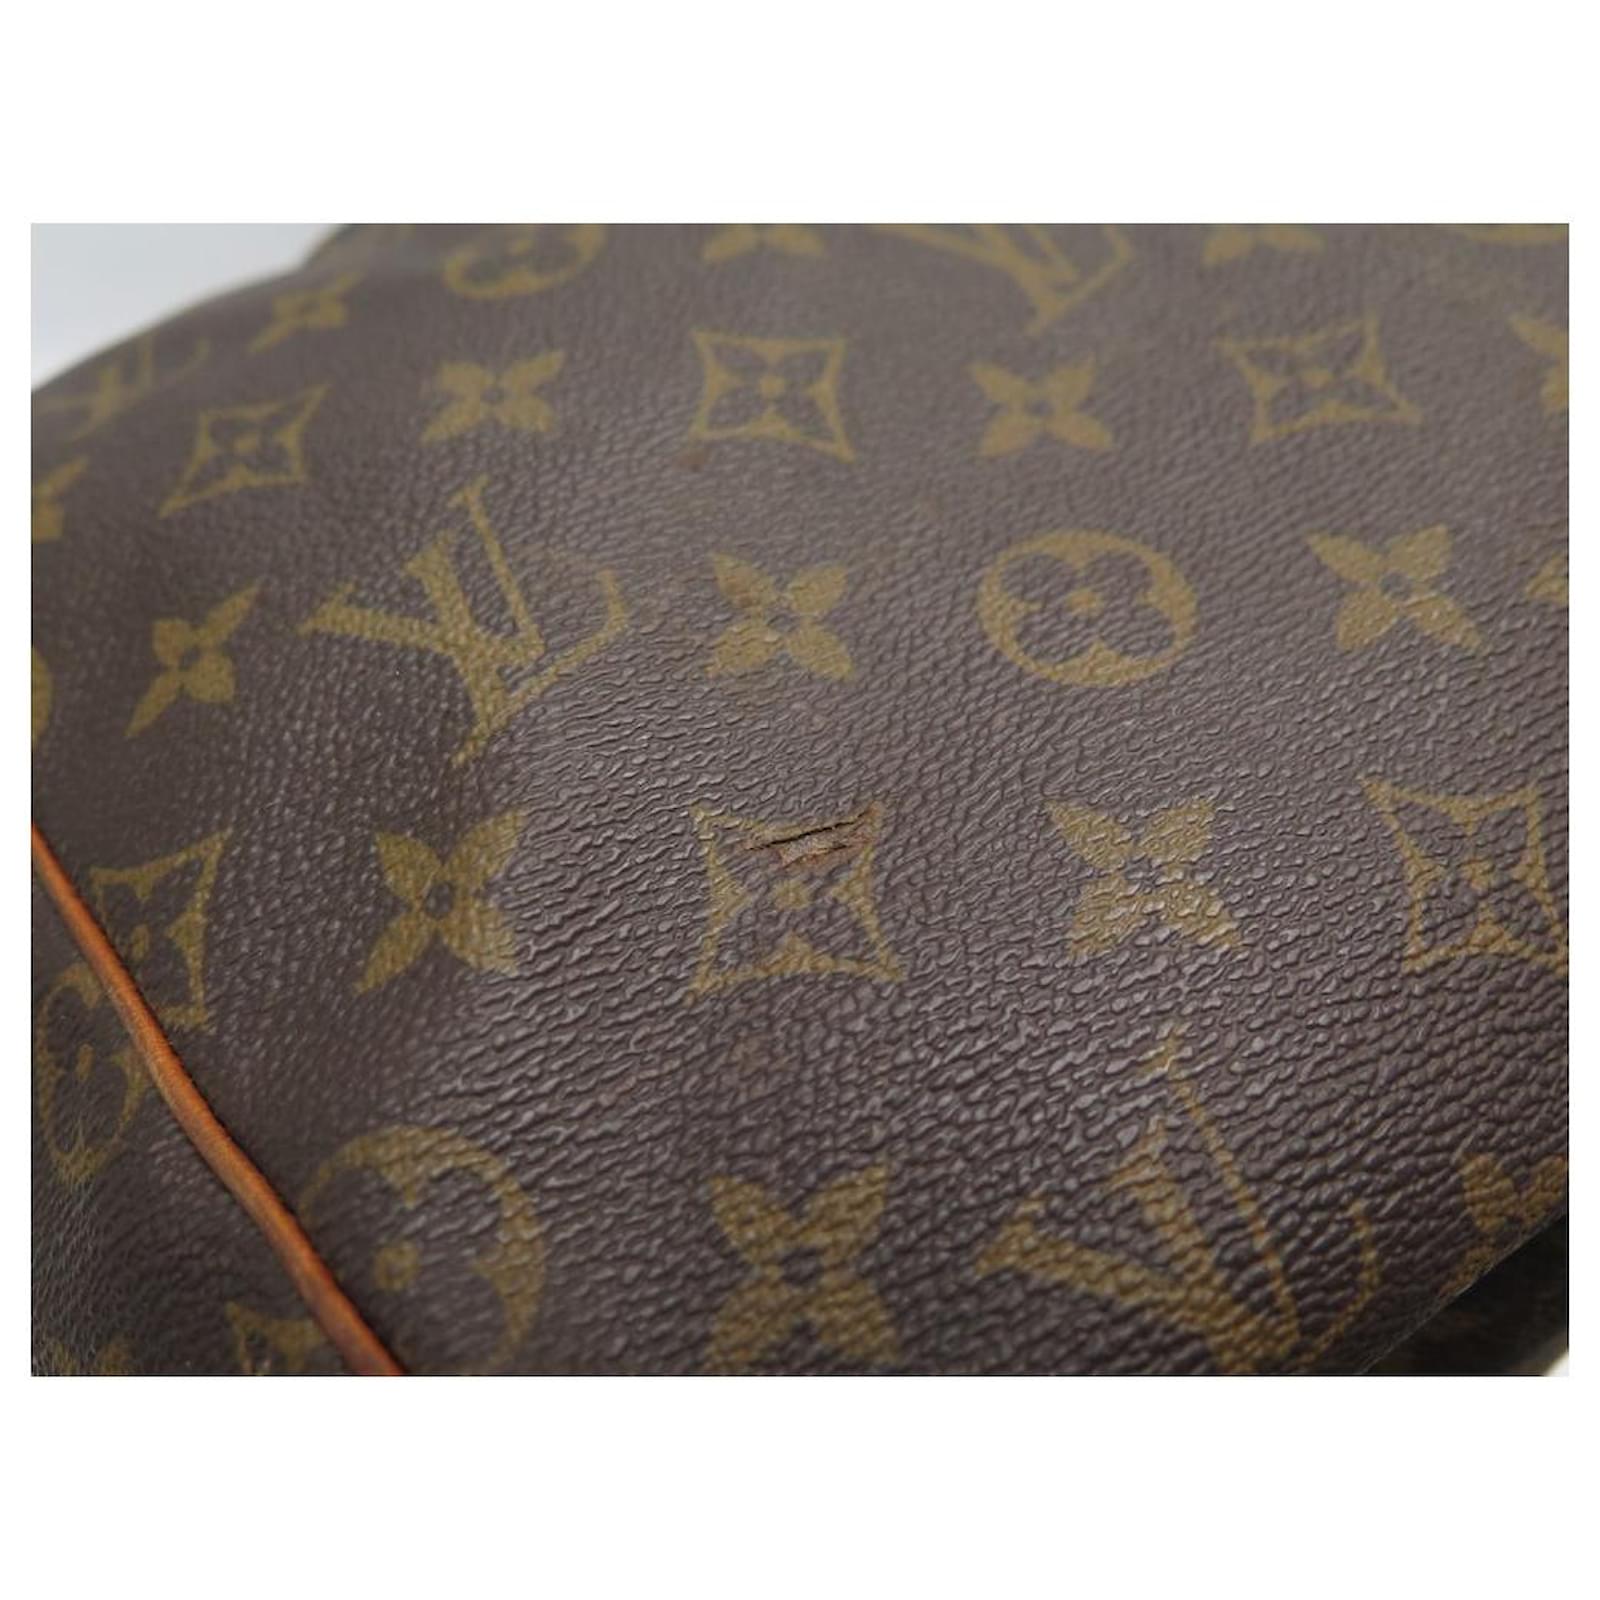 Louis Vuitton Keepall Travel bag 369807